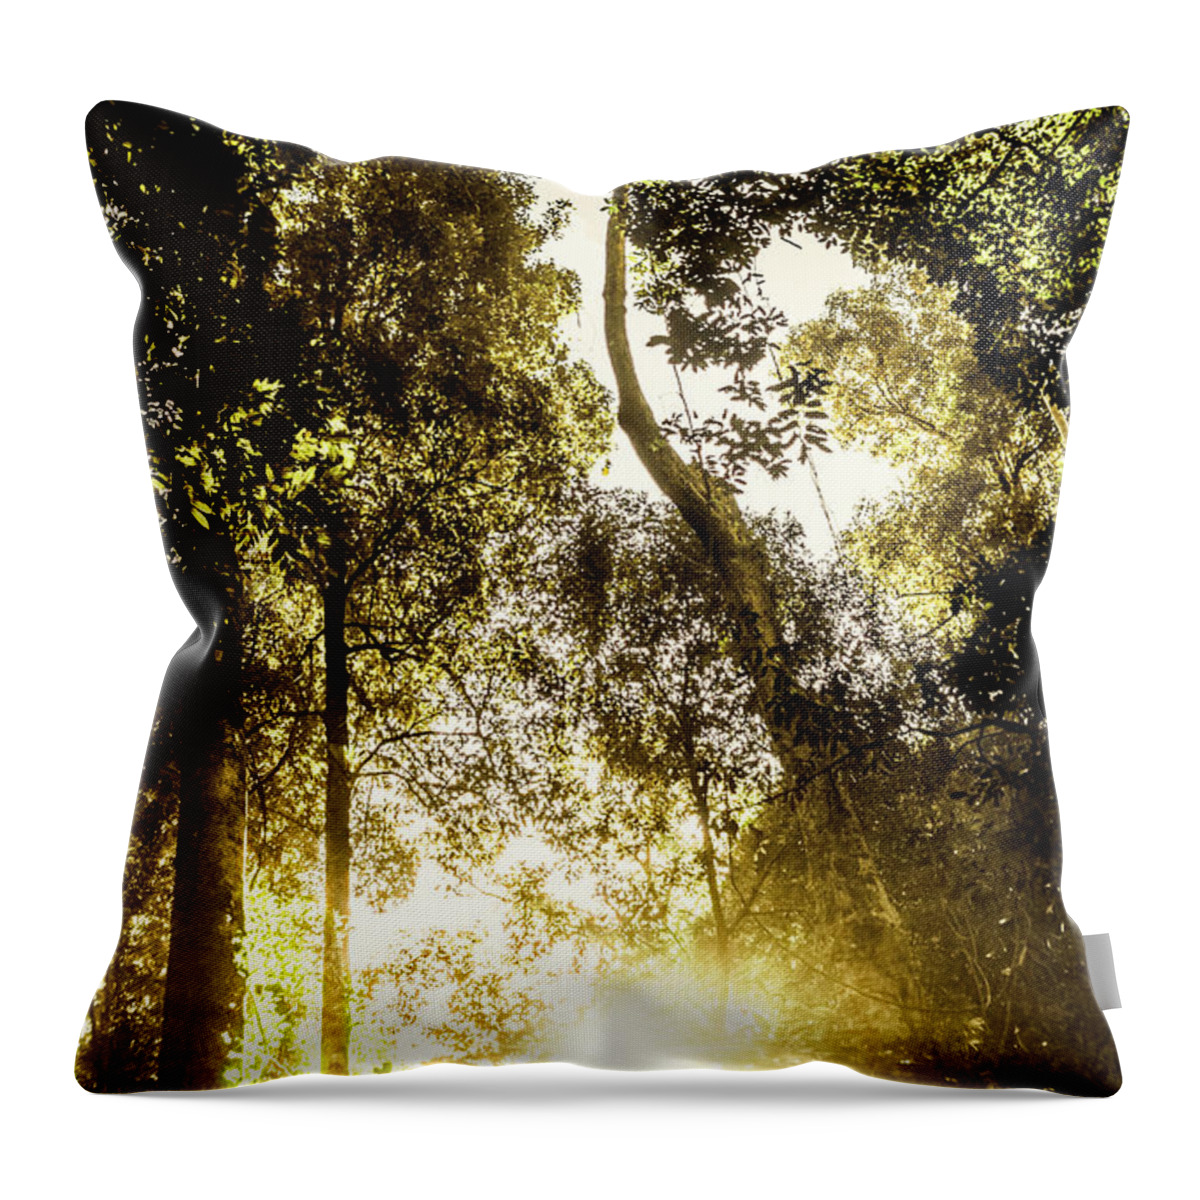 Sun Throw Pillow featuring the photograph Jungles light by Jorgo Photography